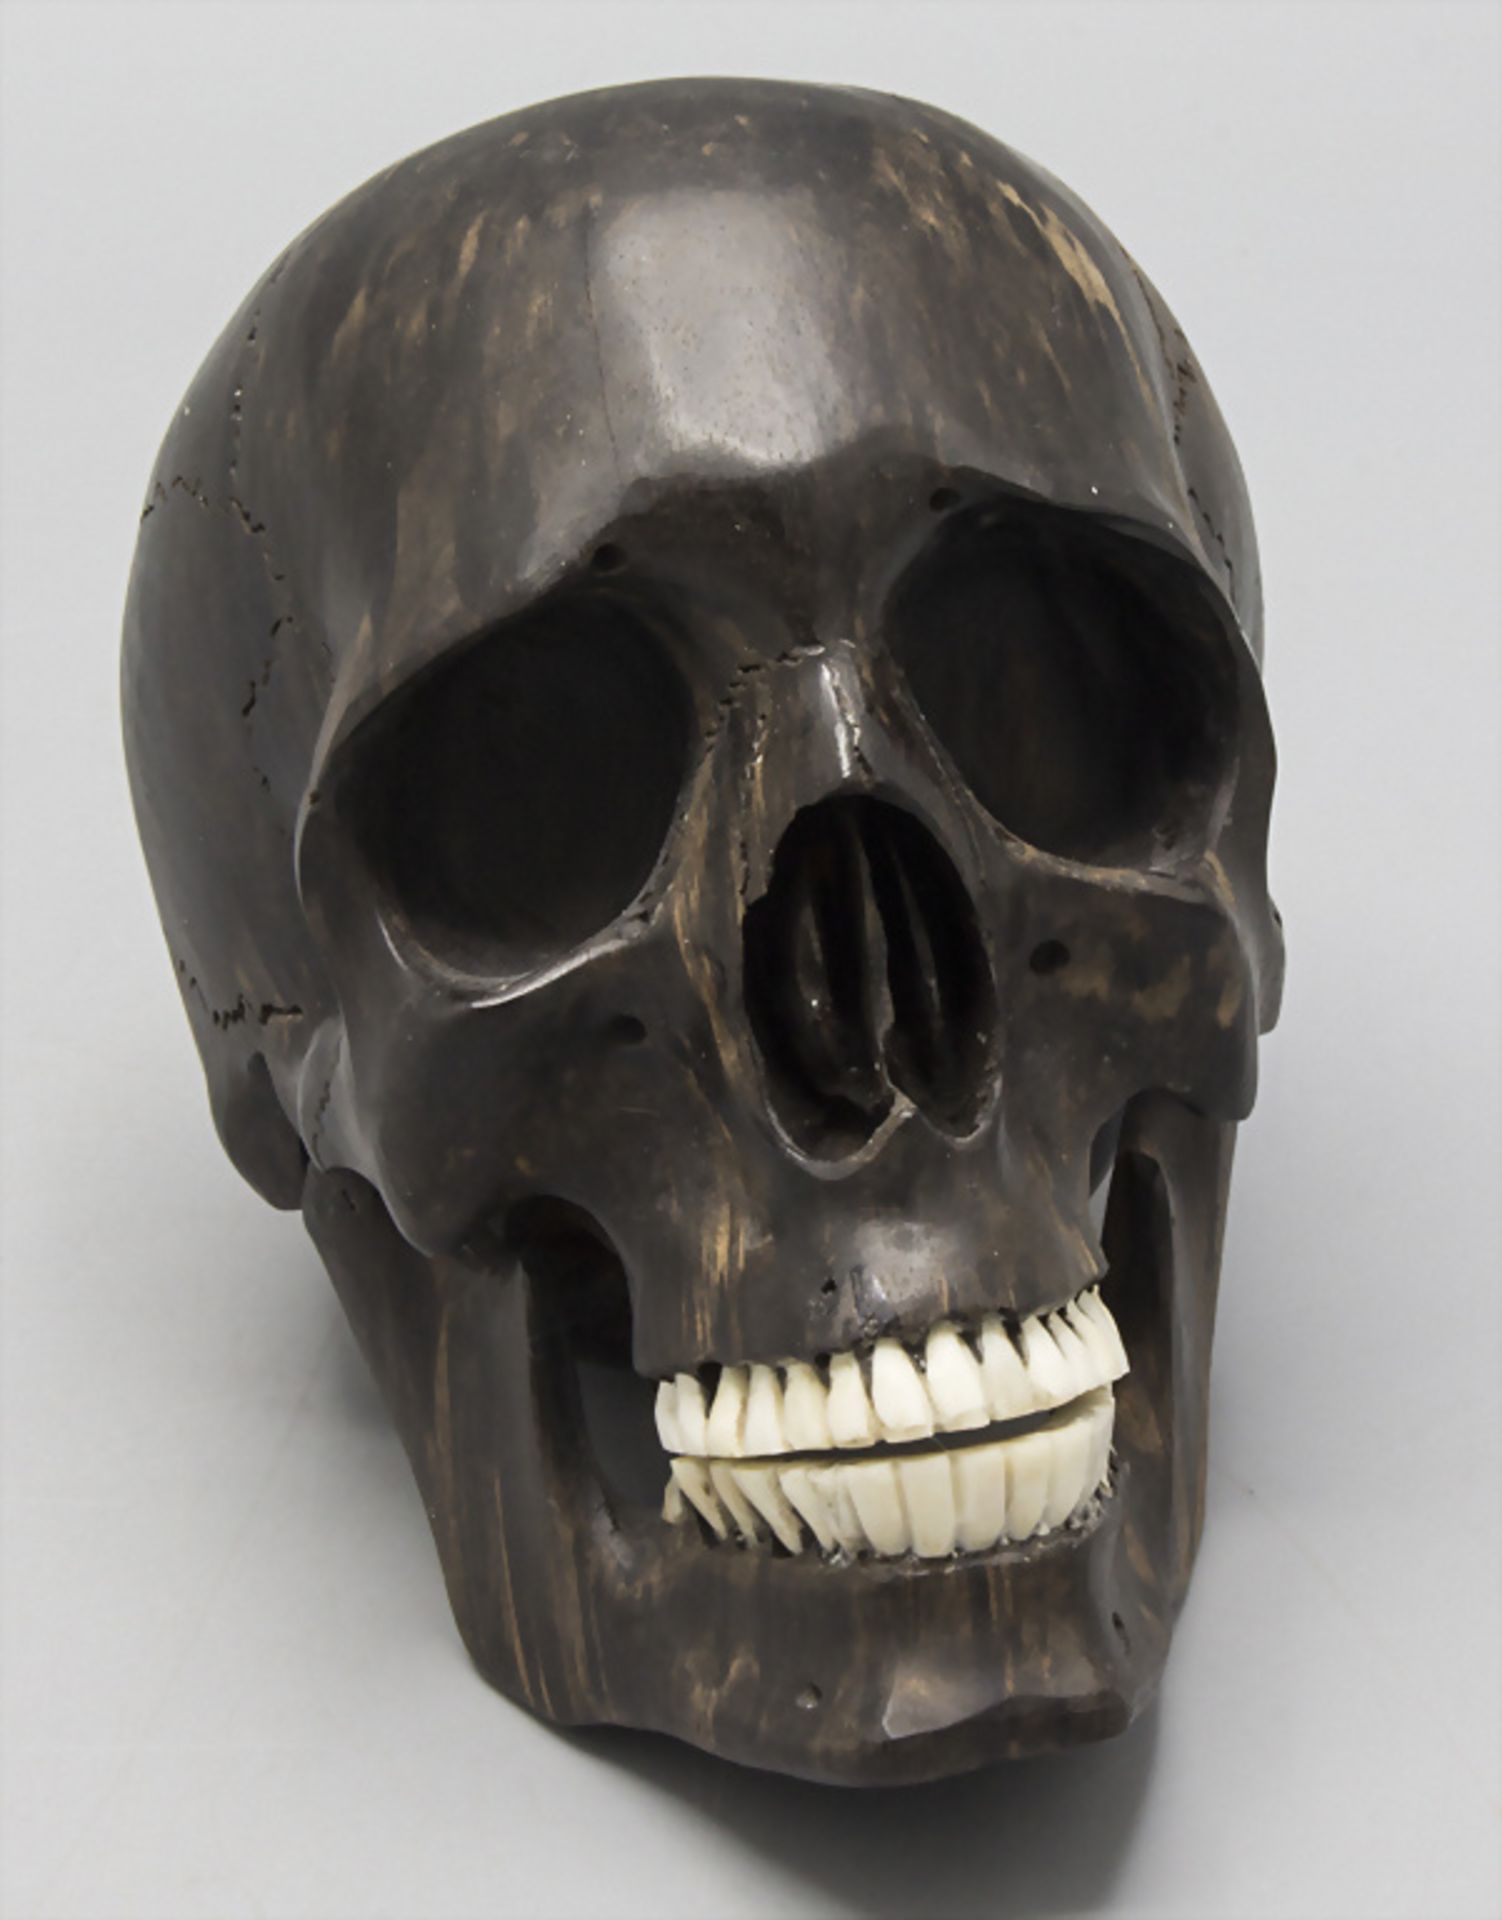 Totenschädel aus Holz / A wooden skull